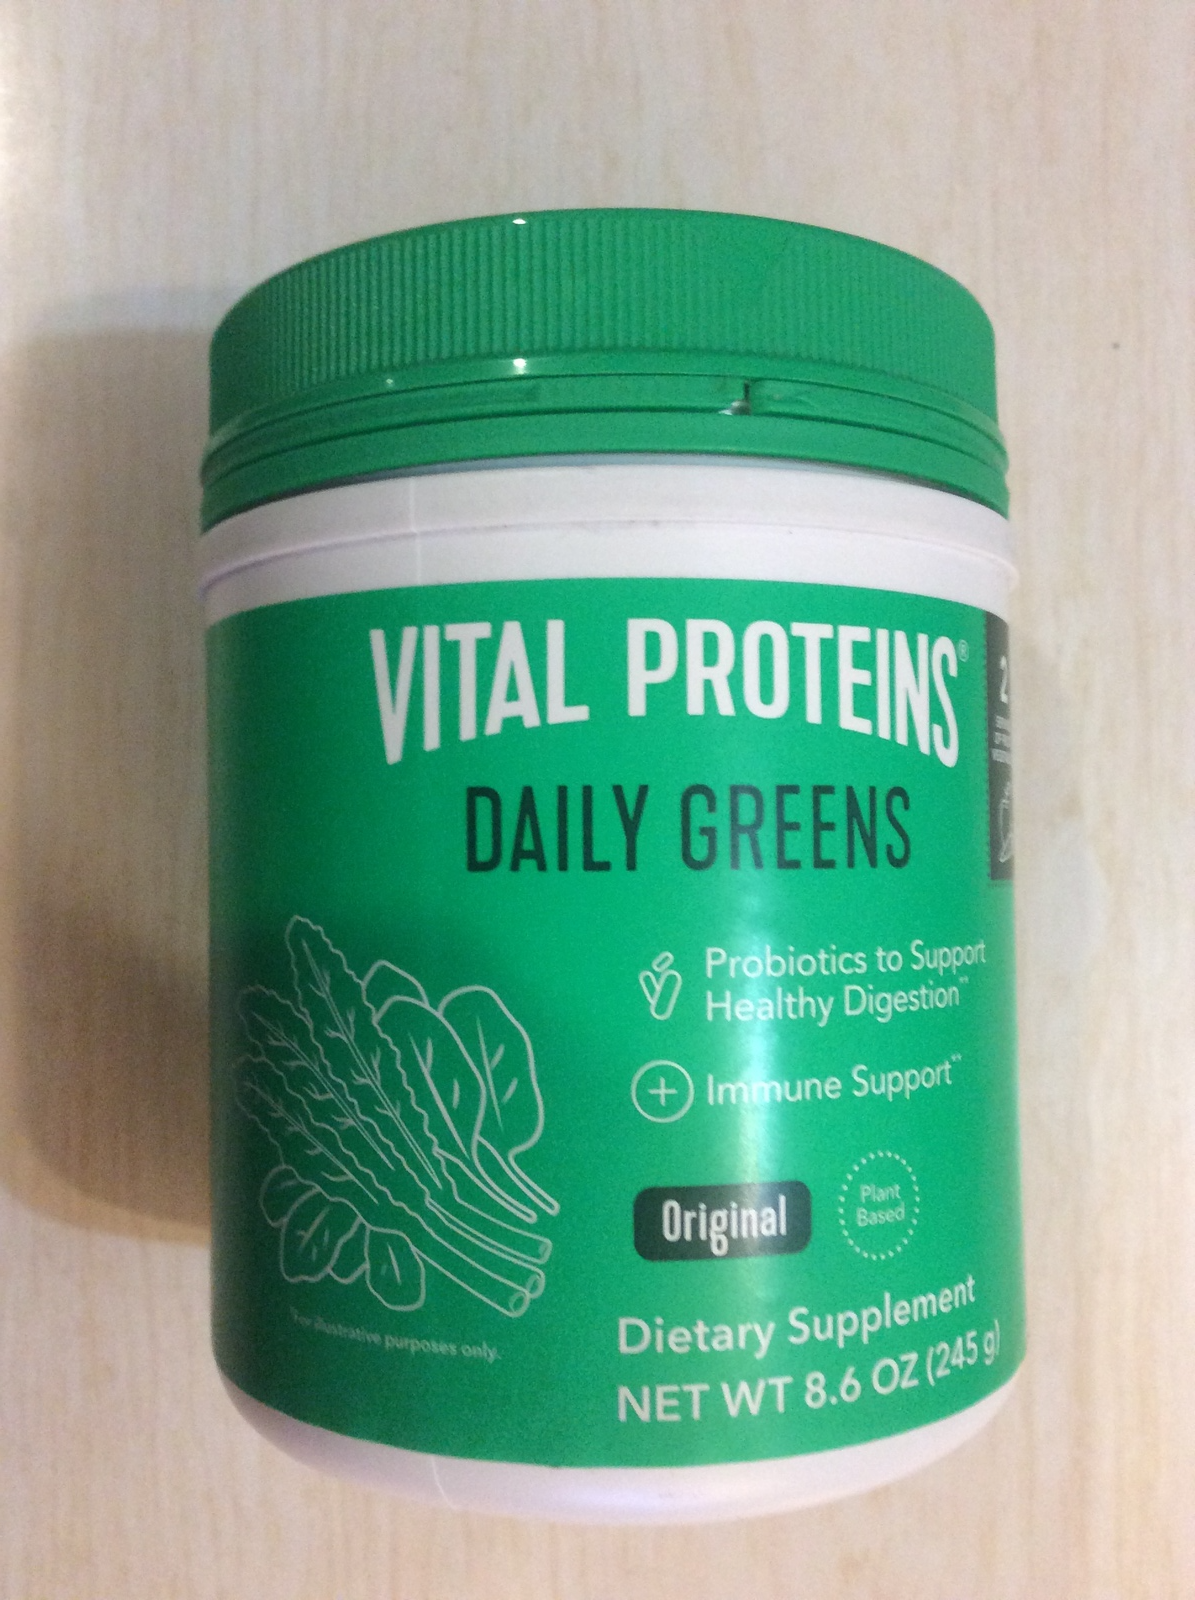 VITAL PROTEINS DAILY GREENS - 8.6 oz (245 g) - ORIGINAL Flavor - $31.95